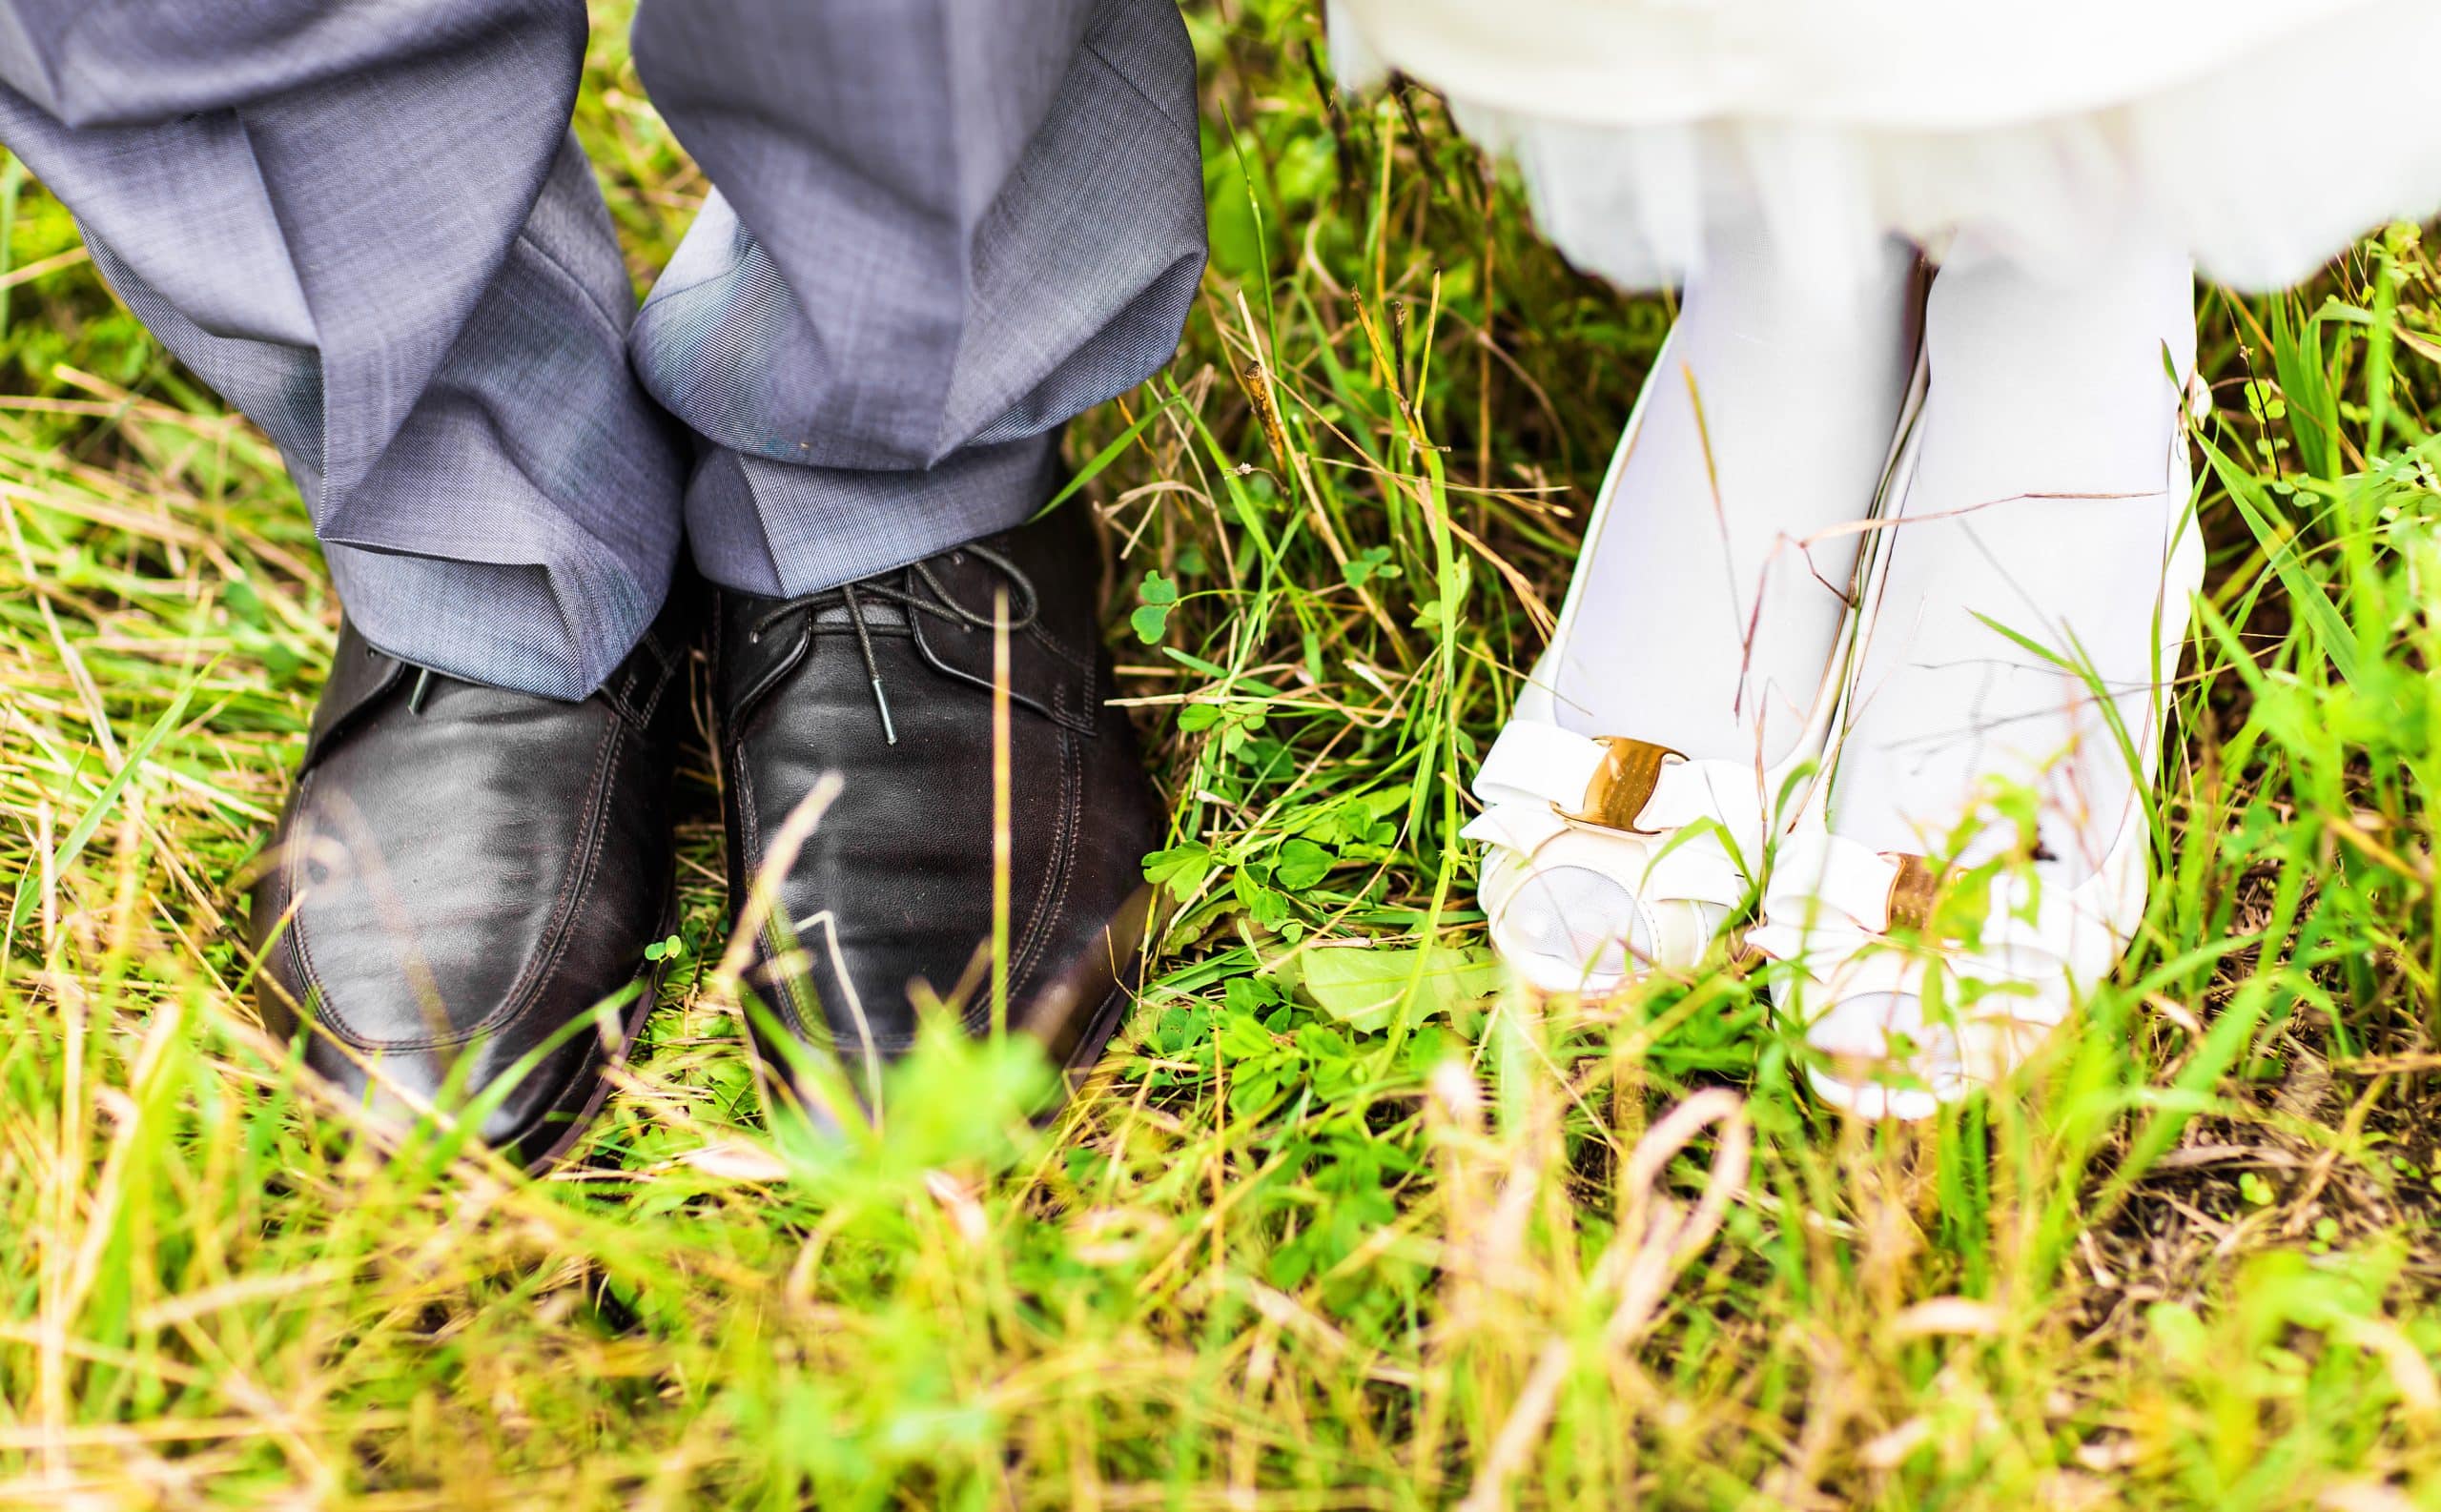 feet and shoes of newlyweds couple. Wedding couple, bride and groom